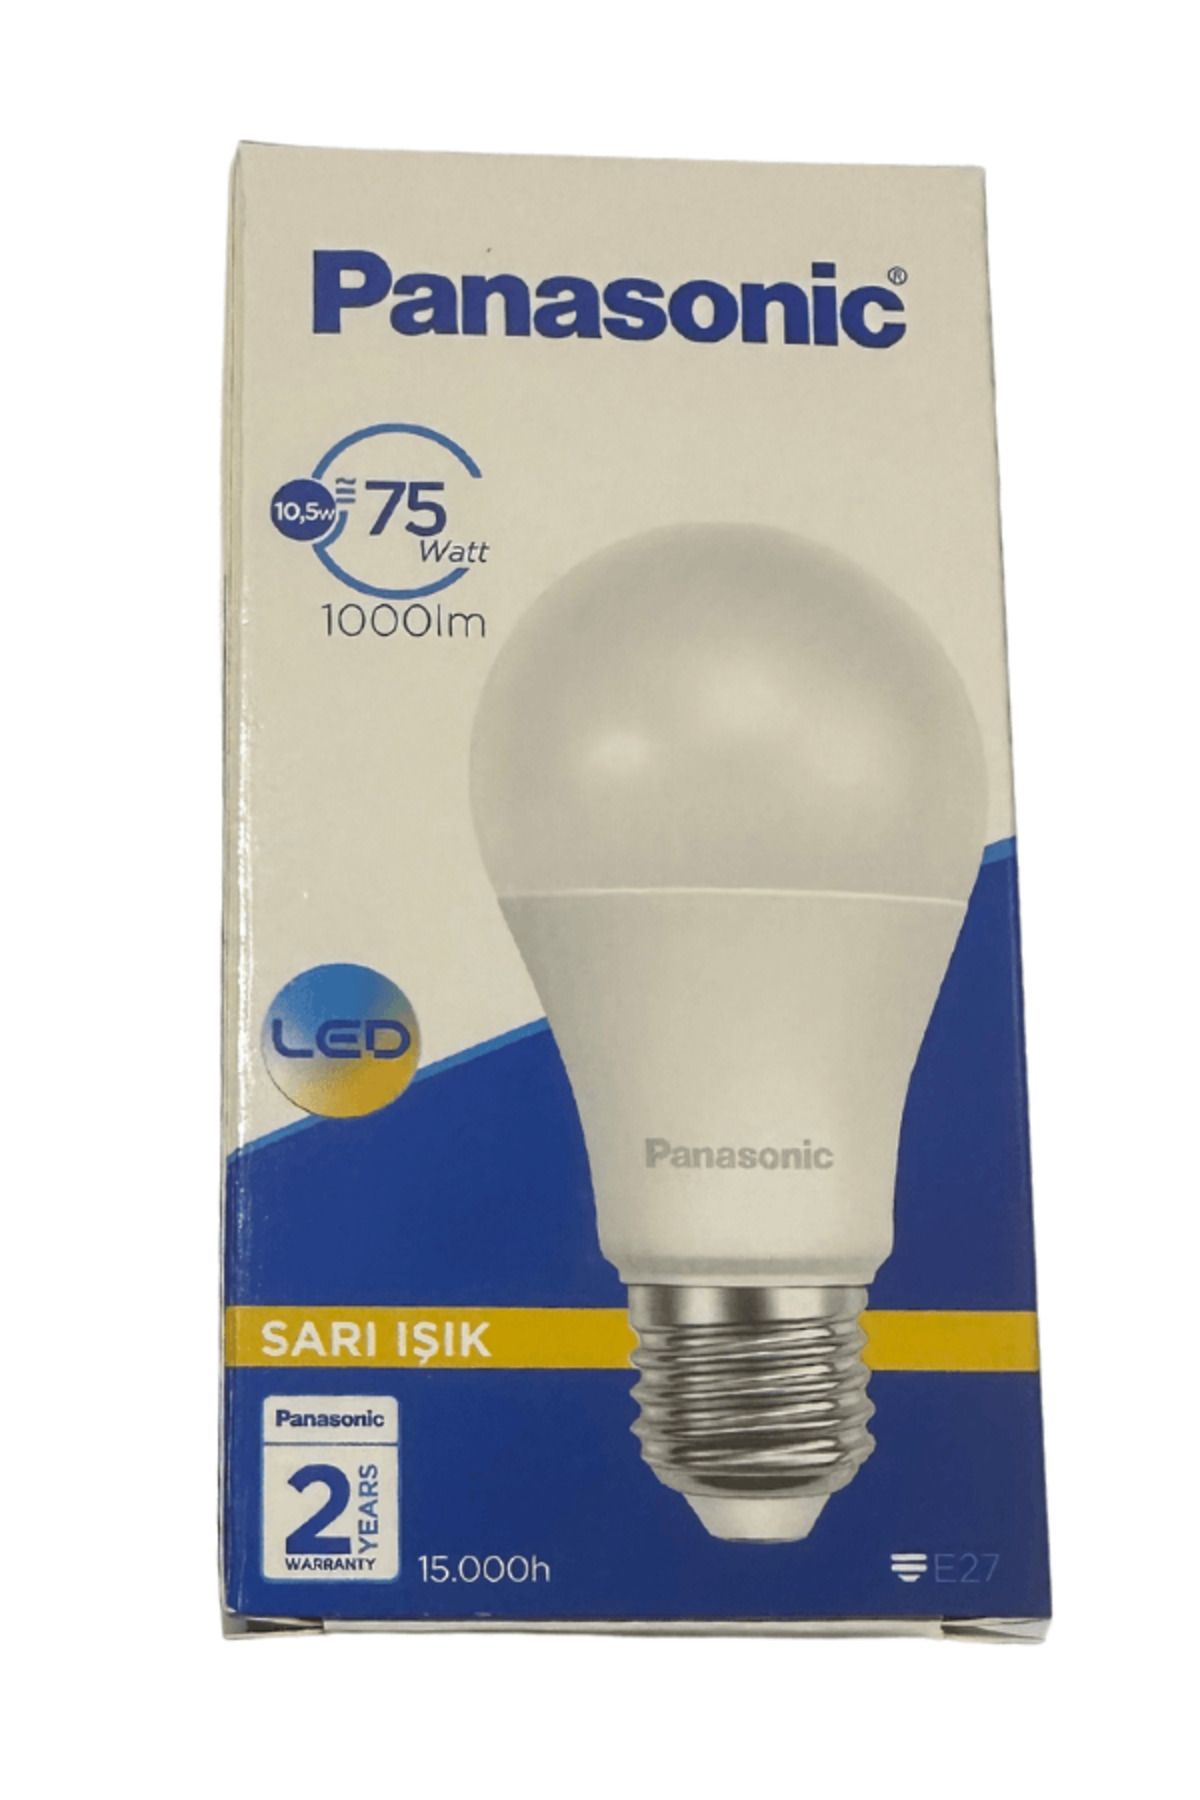 Panasonic 10.5W (75W) 2700K (Sarı Işık) E27 Duylu Led Ampul (4 Adet)